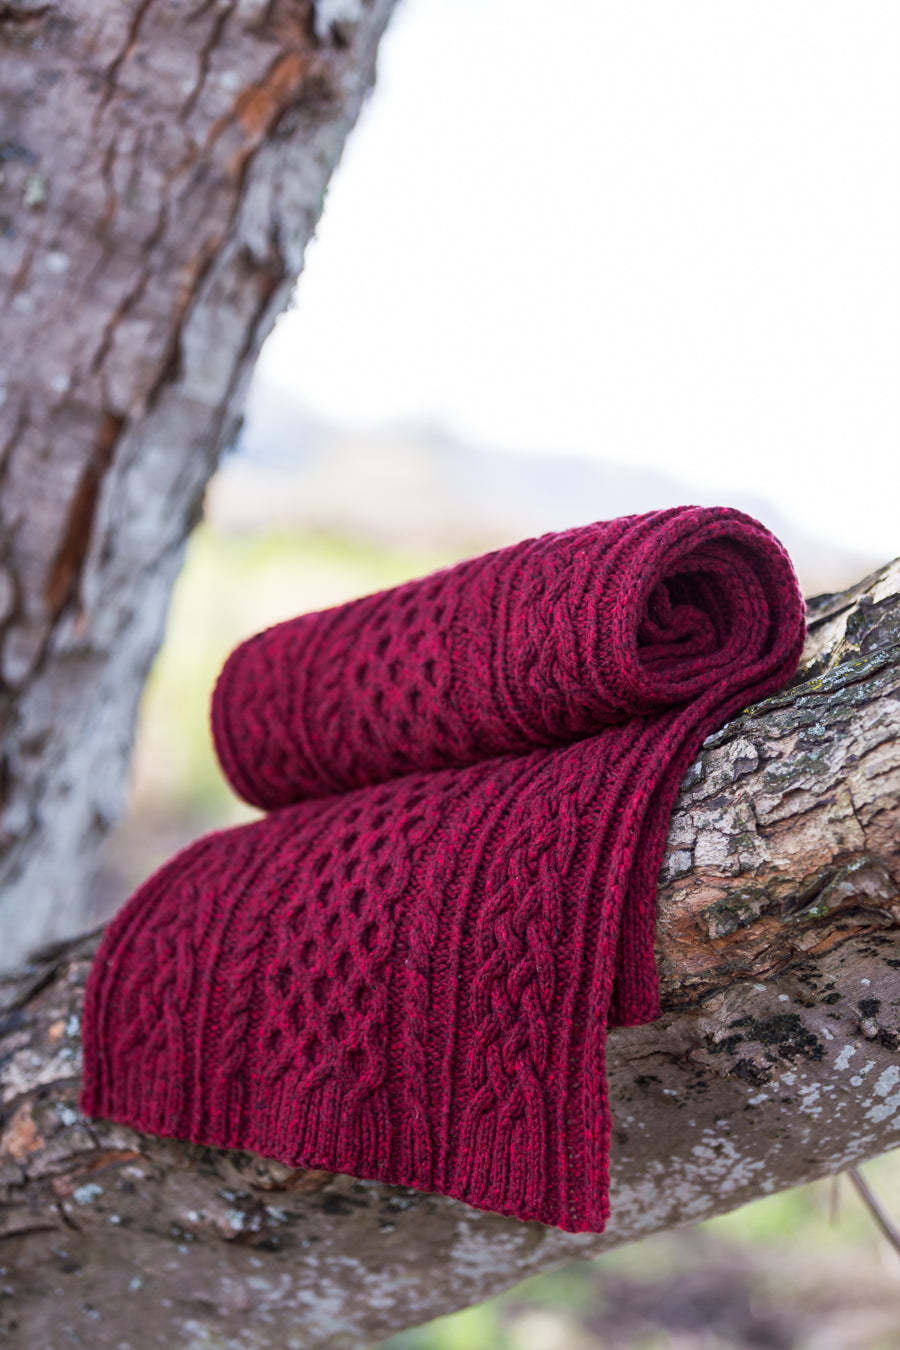 Aquinnah Scarf & Wrap | Knitting Pattern by Kerry Robb